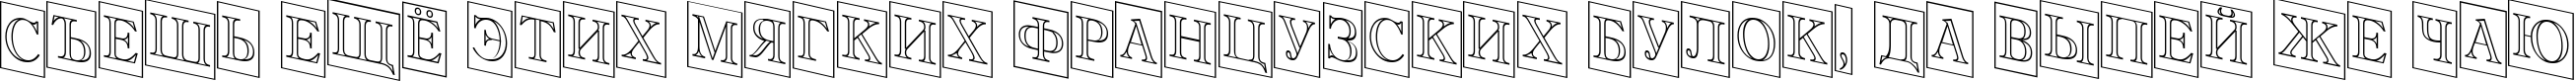 Пример написания шрифтом a_AntiqueTitulTrCmDnOtl текста на русском